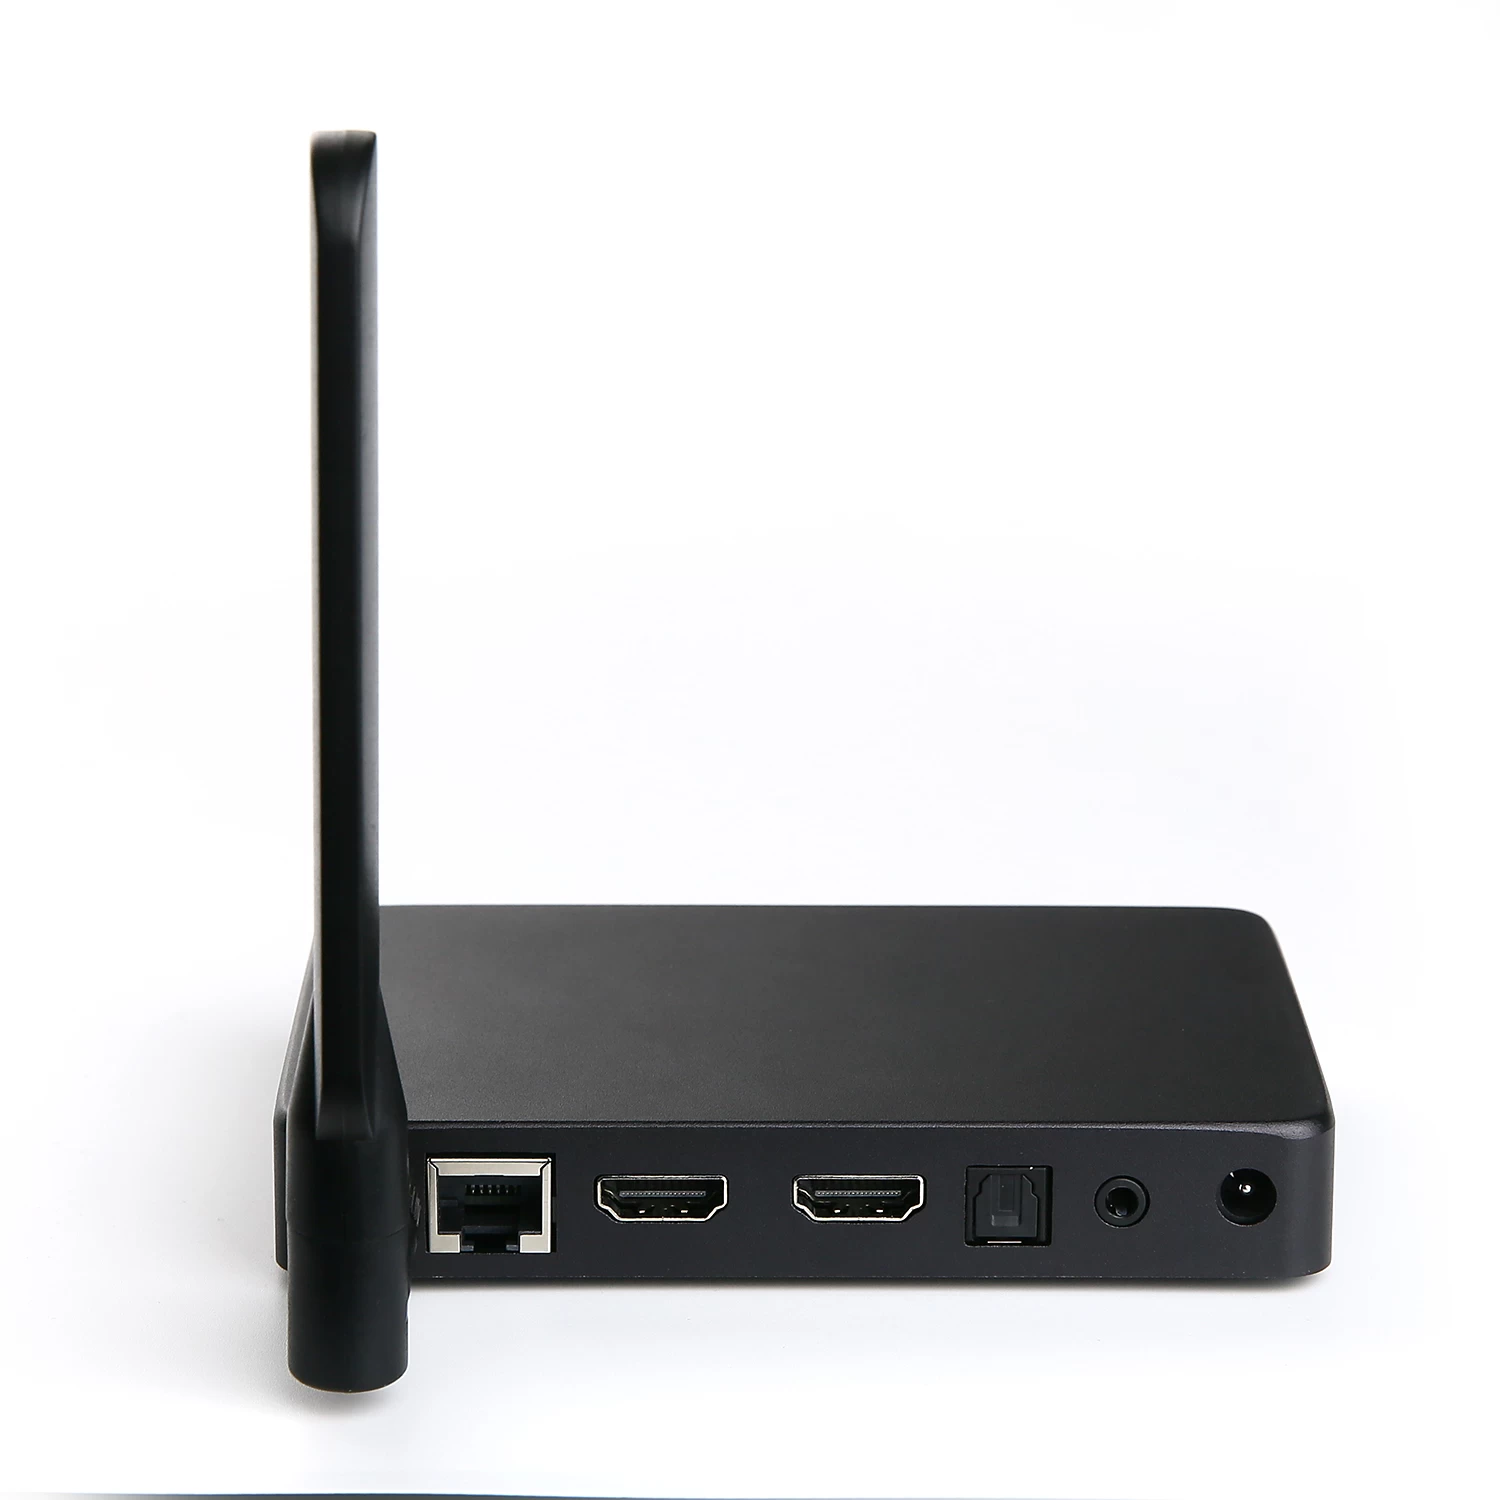 OEM/ODM Realtek RTD1295 HDMI input Dongle X2 Android Mini PC HDMI TV Stick